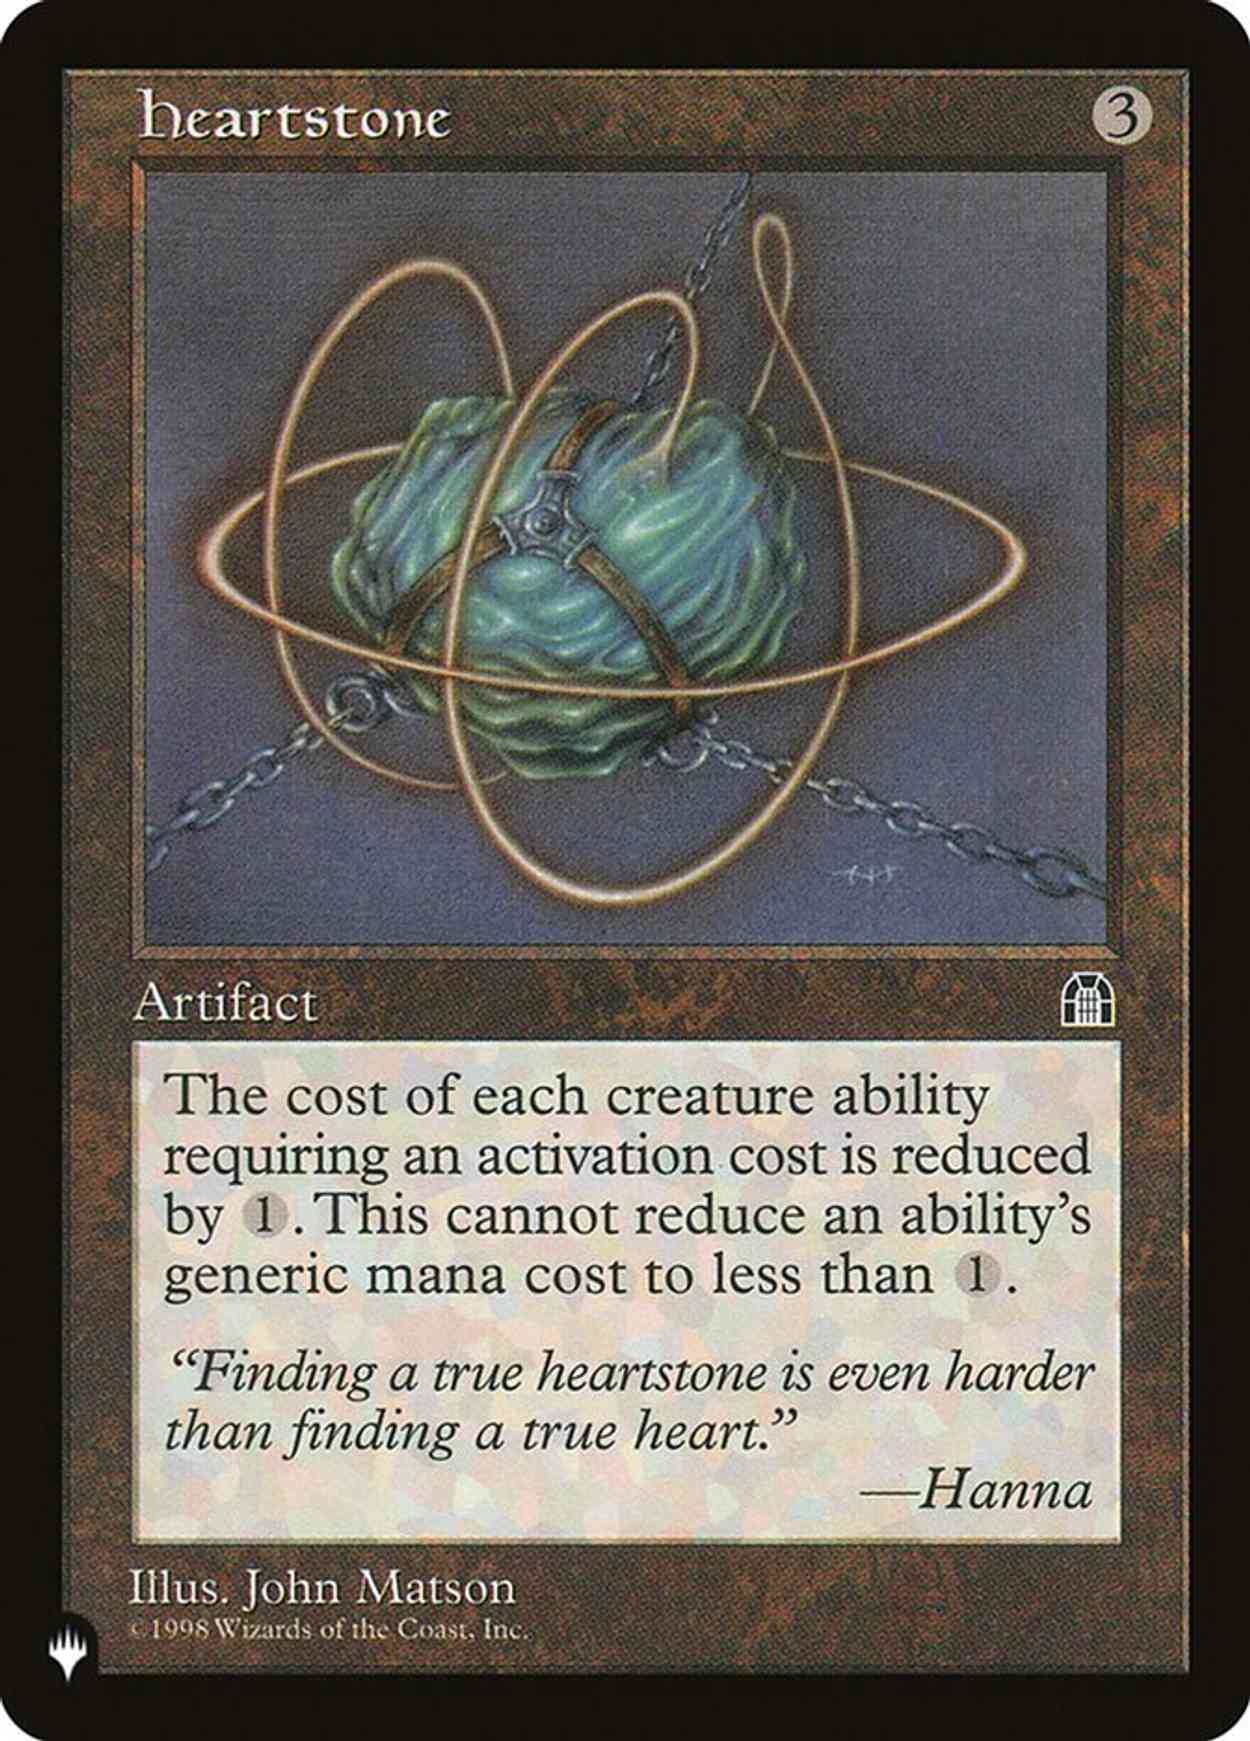 Heartstone magic card front